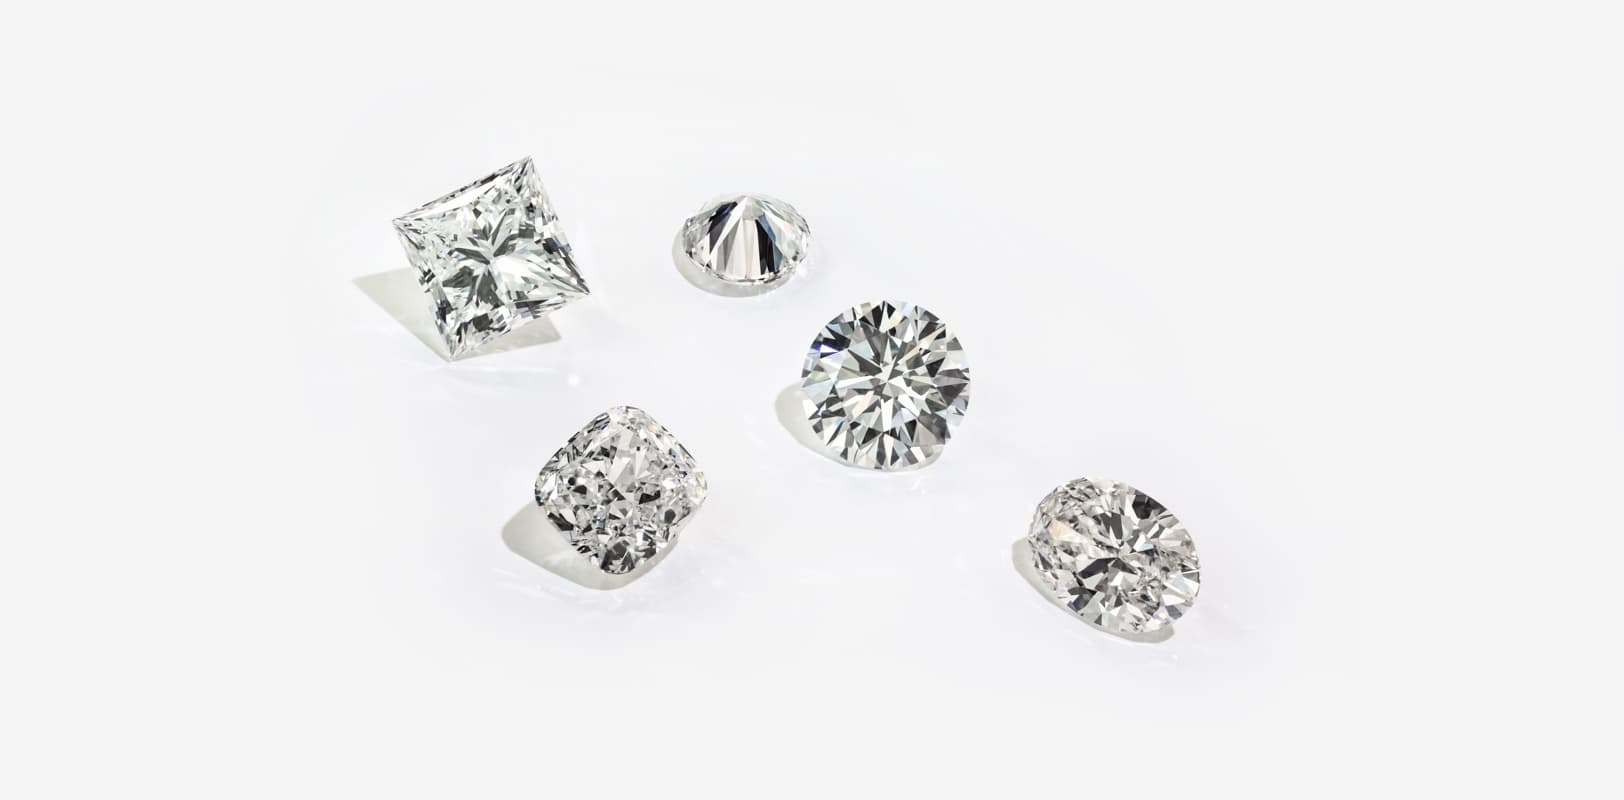 loose-lab-grown-diamonds